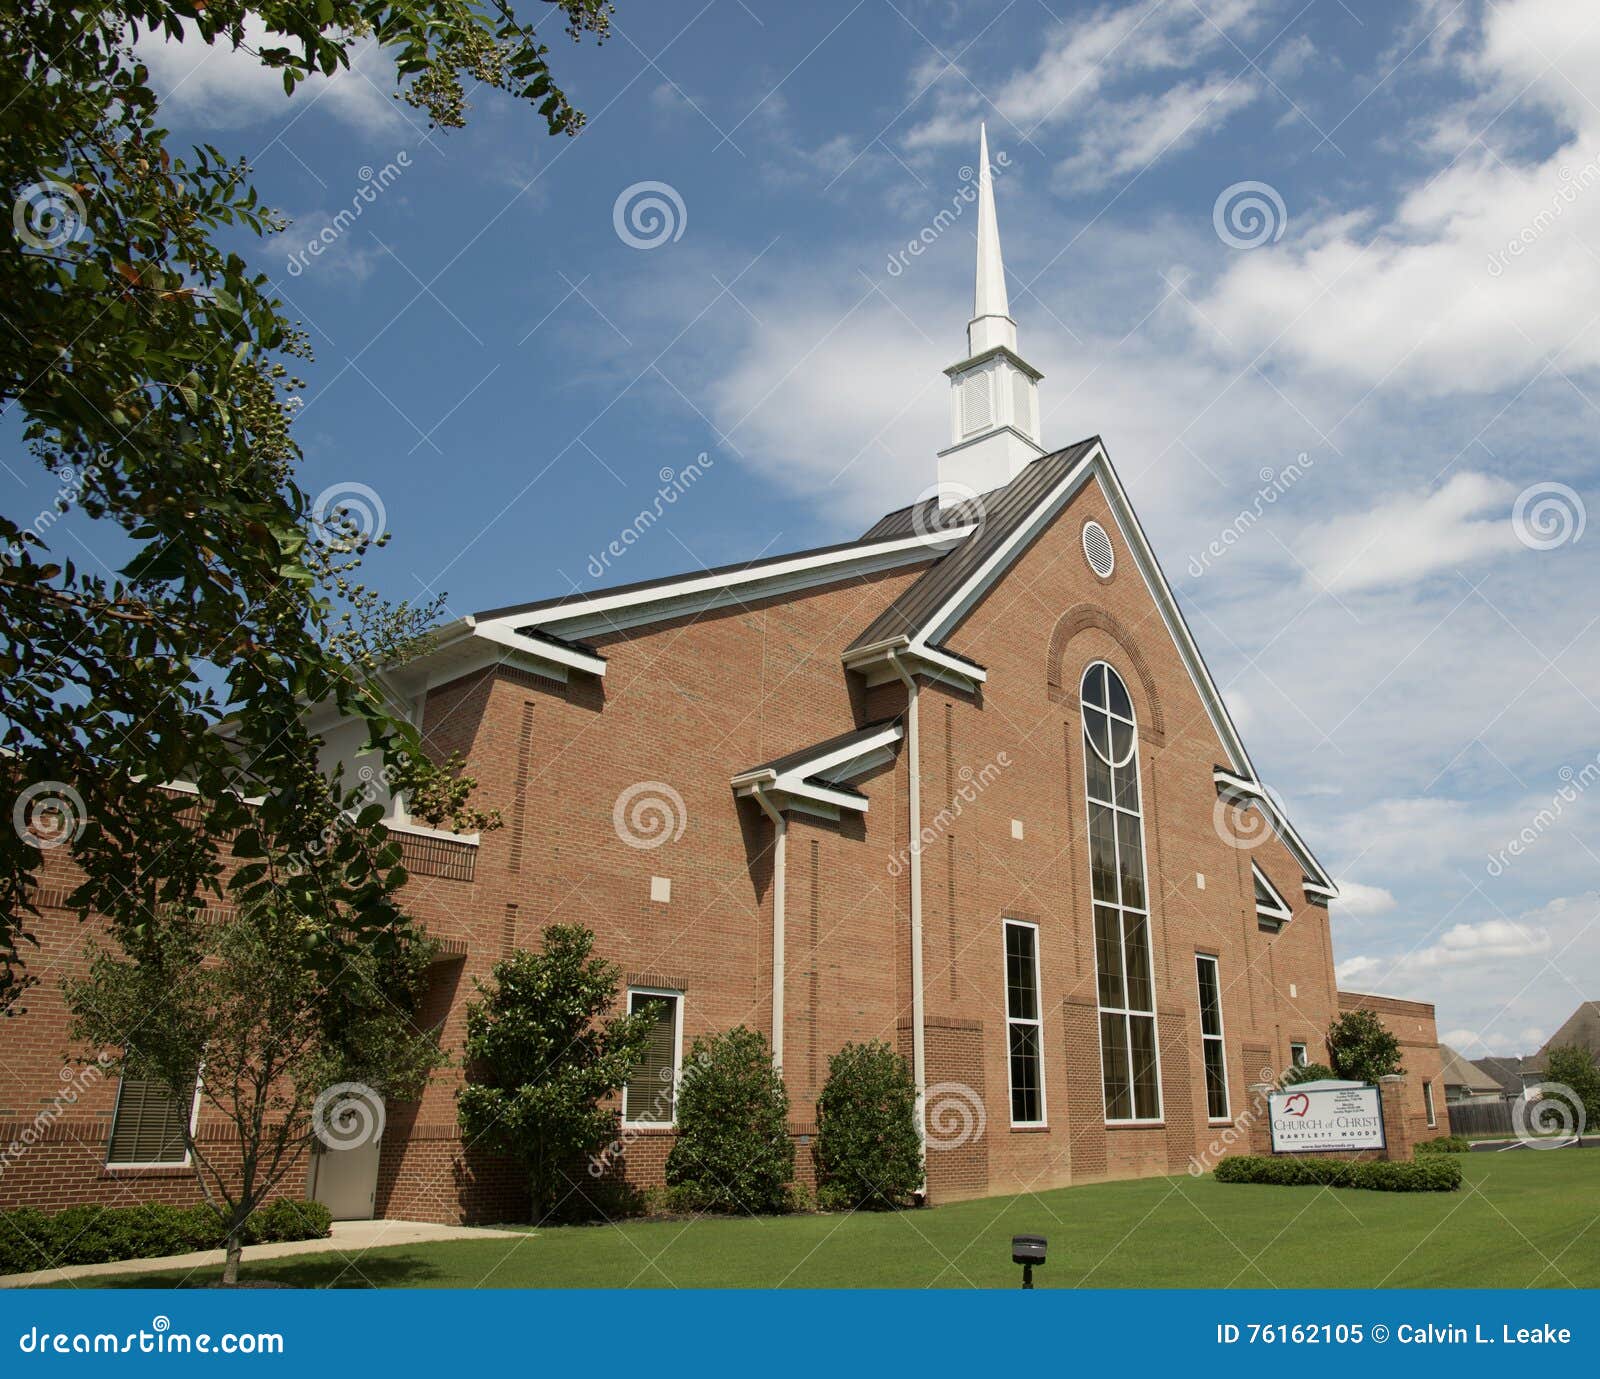 Bartlett Woods Church Of Christ Bartlett, Tn Editorial Image - Image Of Believing, Memphis: 76162105